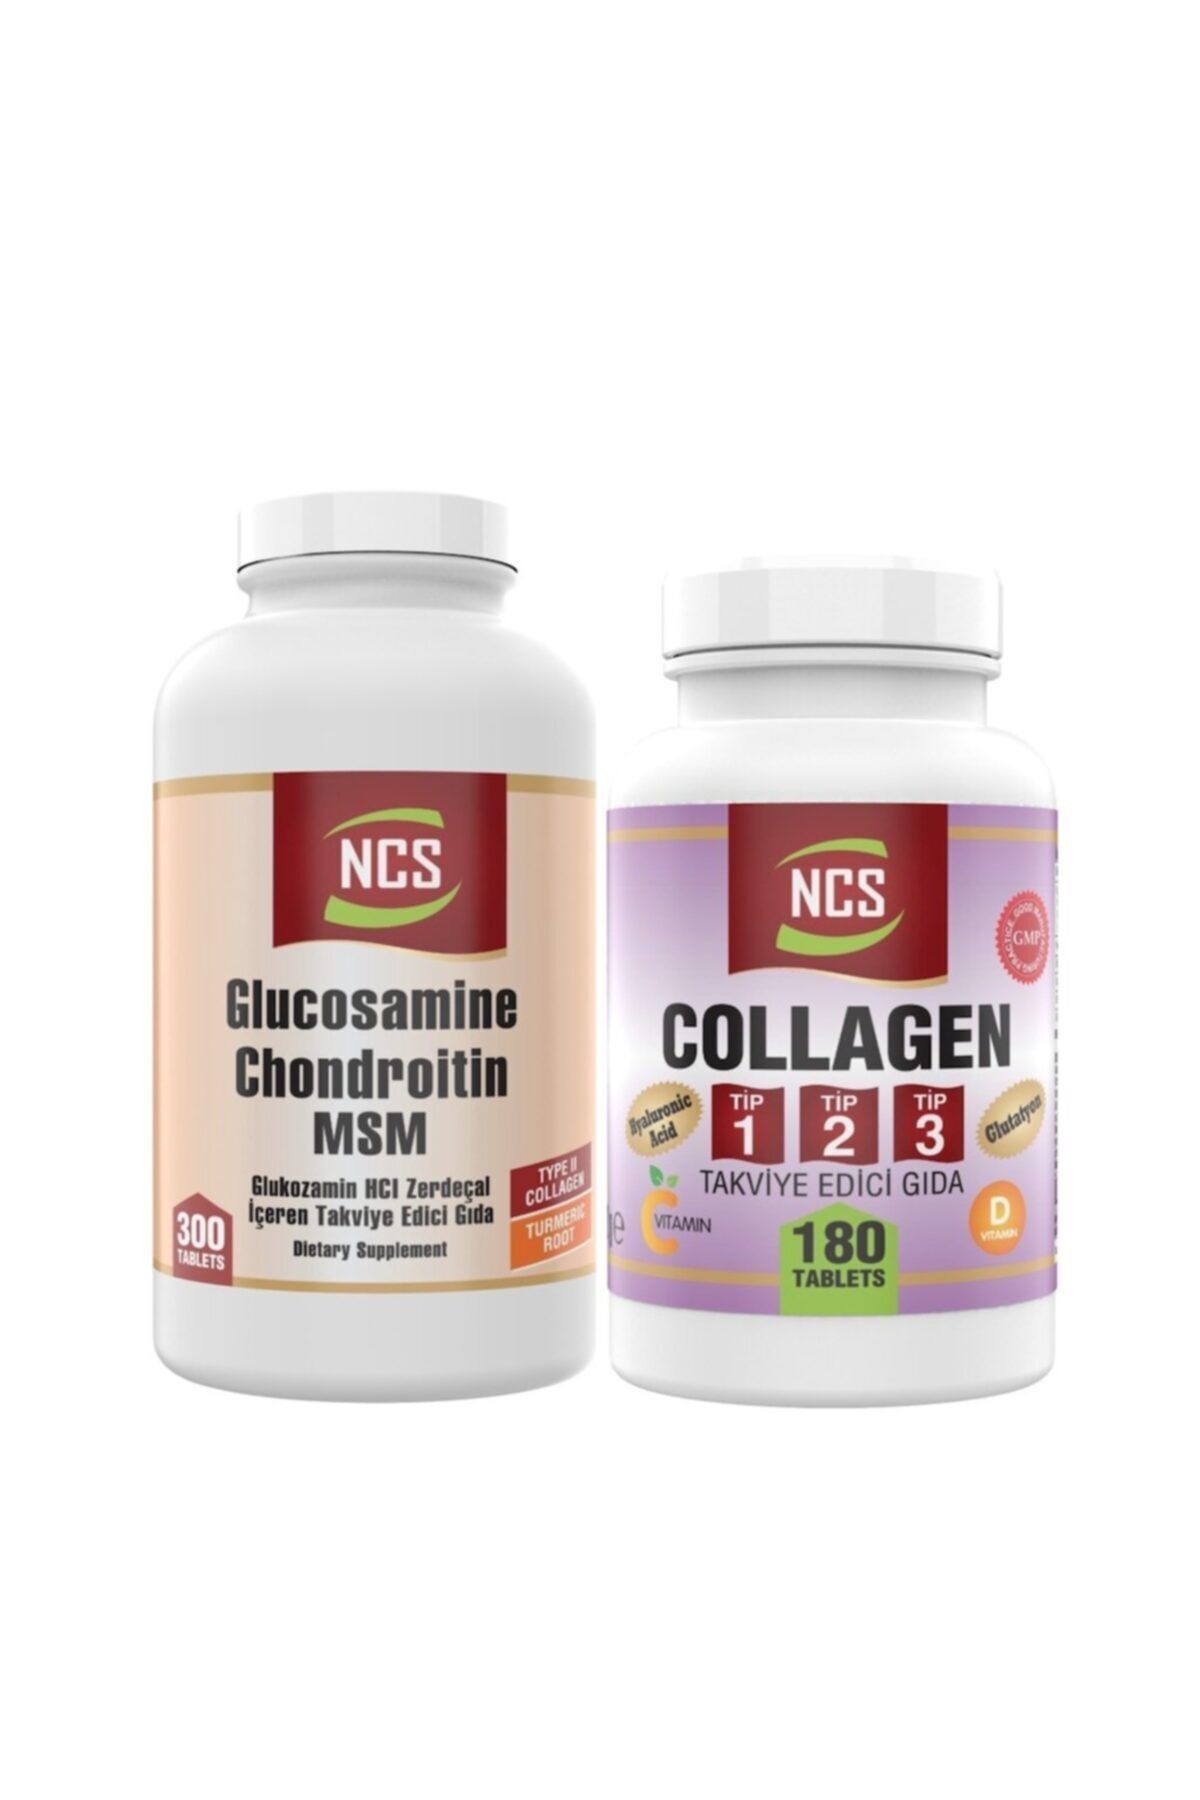 Ncs Collagen Tip 1-2-3 180 Tablet Glucosamine Msm Turmenic Root 300 Tablet